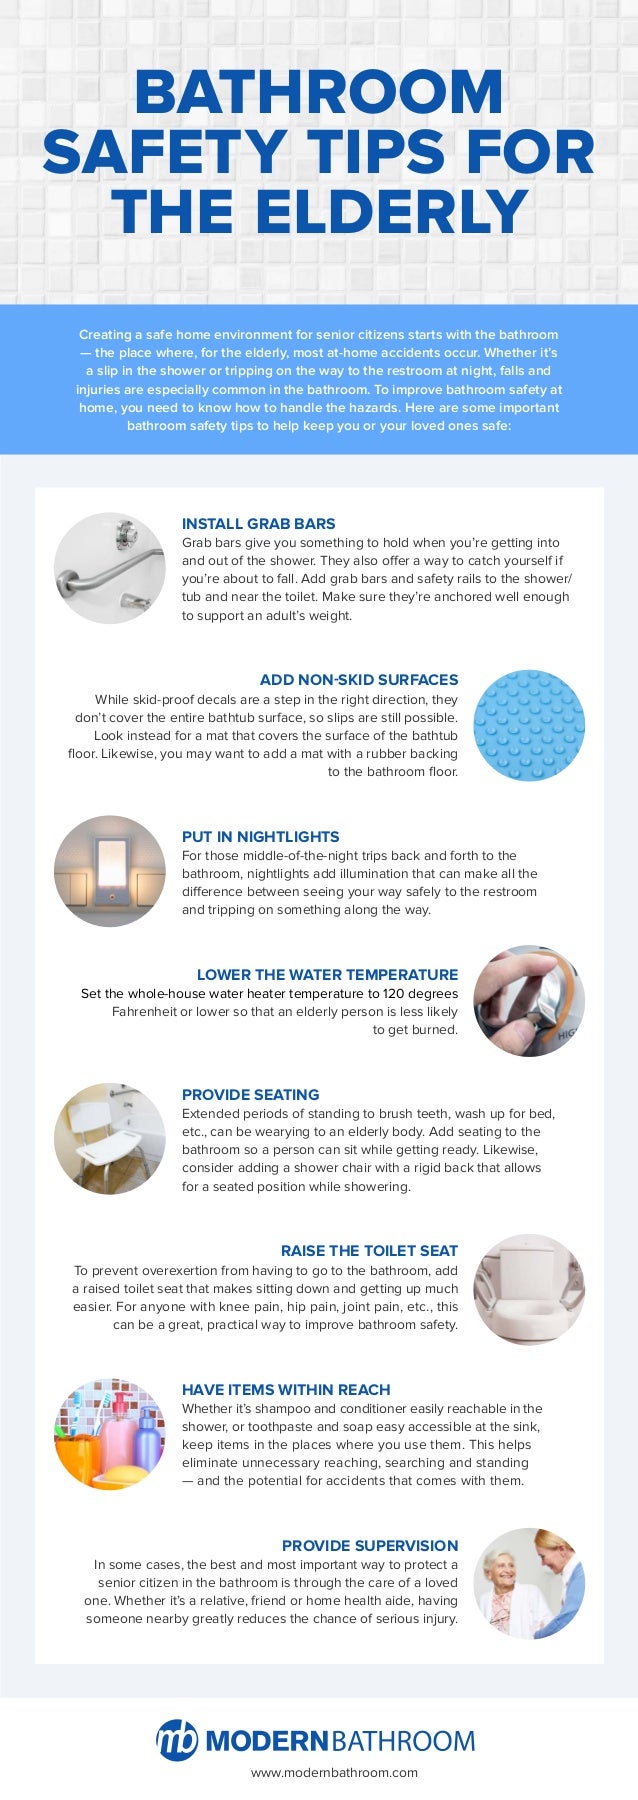 Bathroom Safety Tips for the Elderly